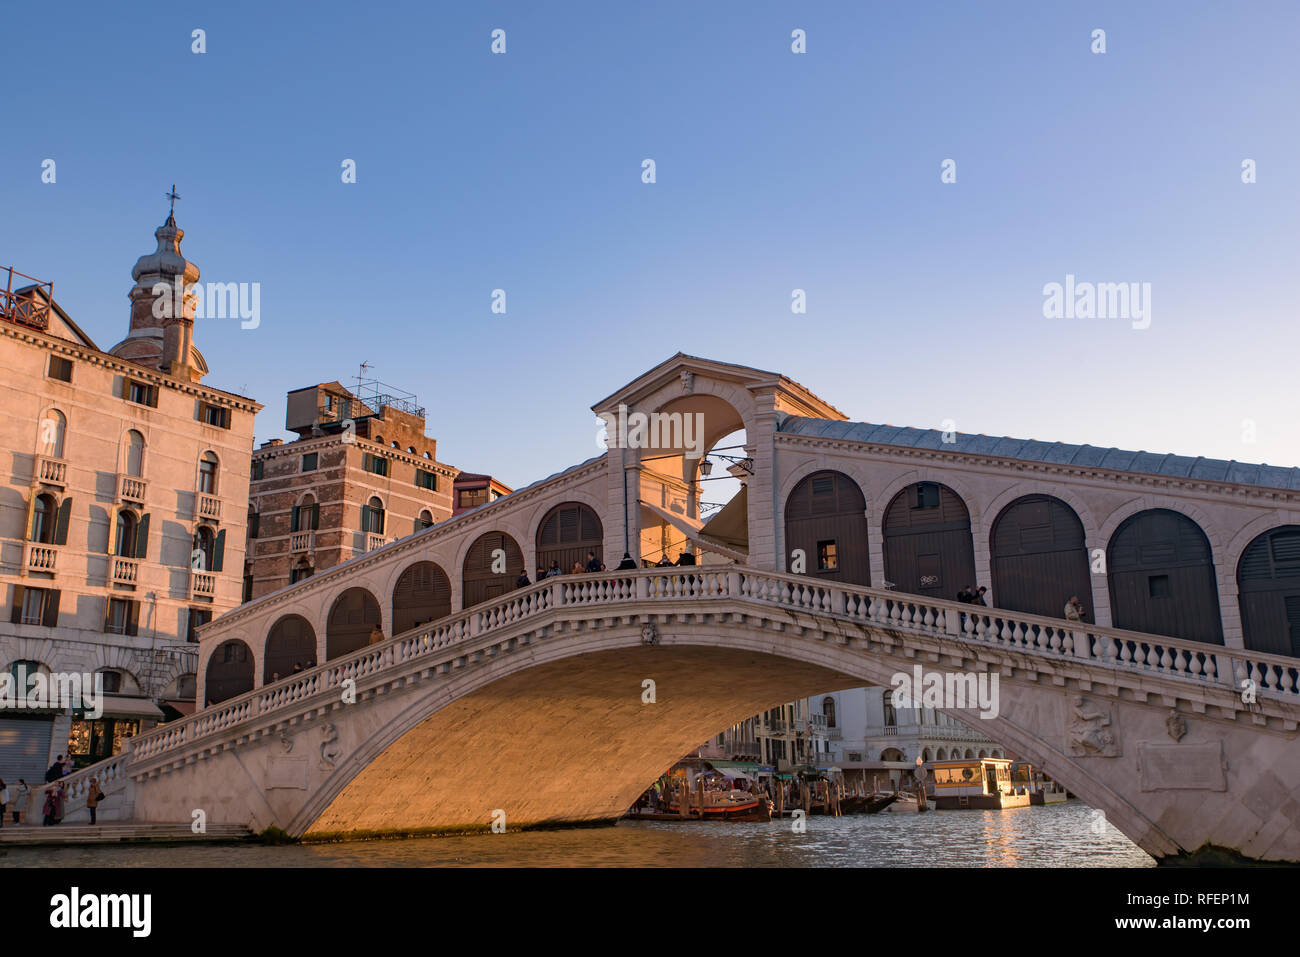 Rialto Bridge (Ponte de Rialto) across Grand Canal at sunrise / sunset time, Venice, Italy Stock Photo